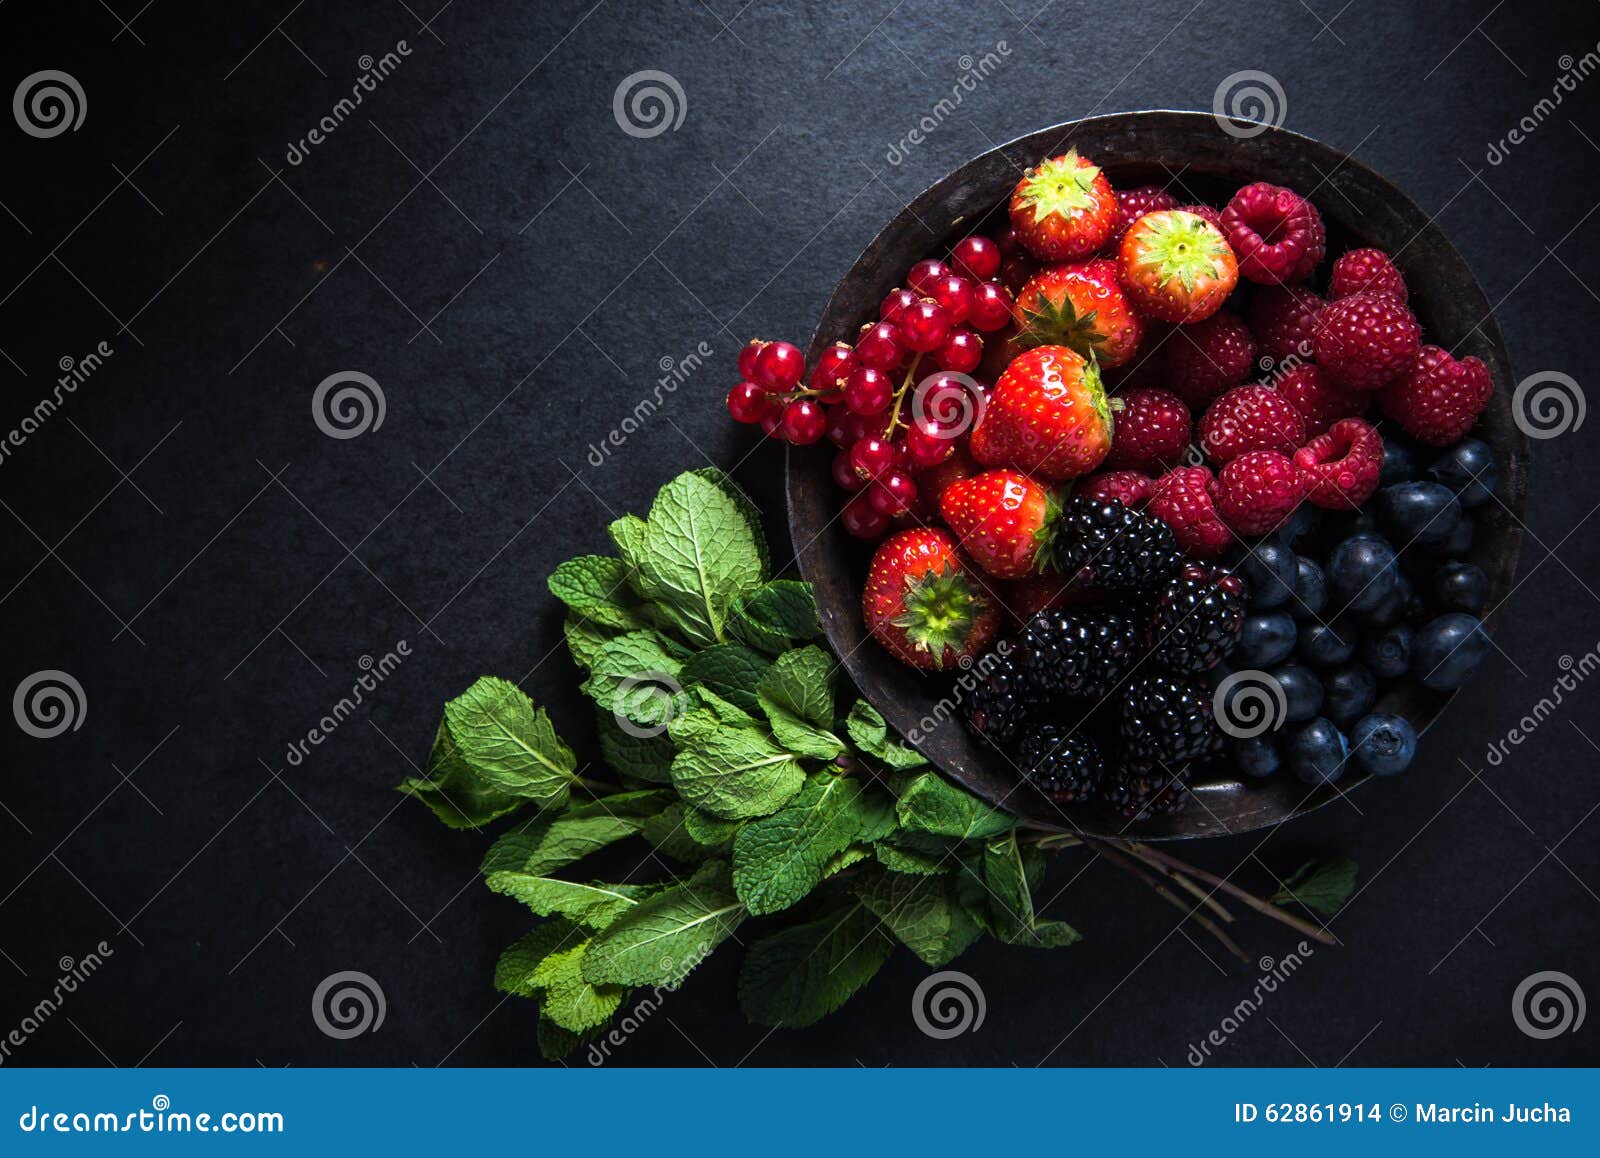 fresh berries in bowl, antioxidant concept